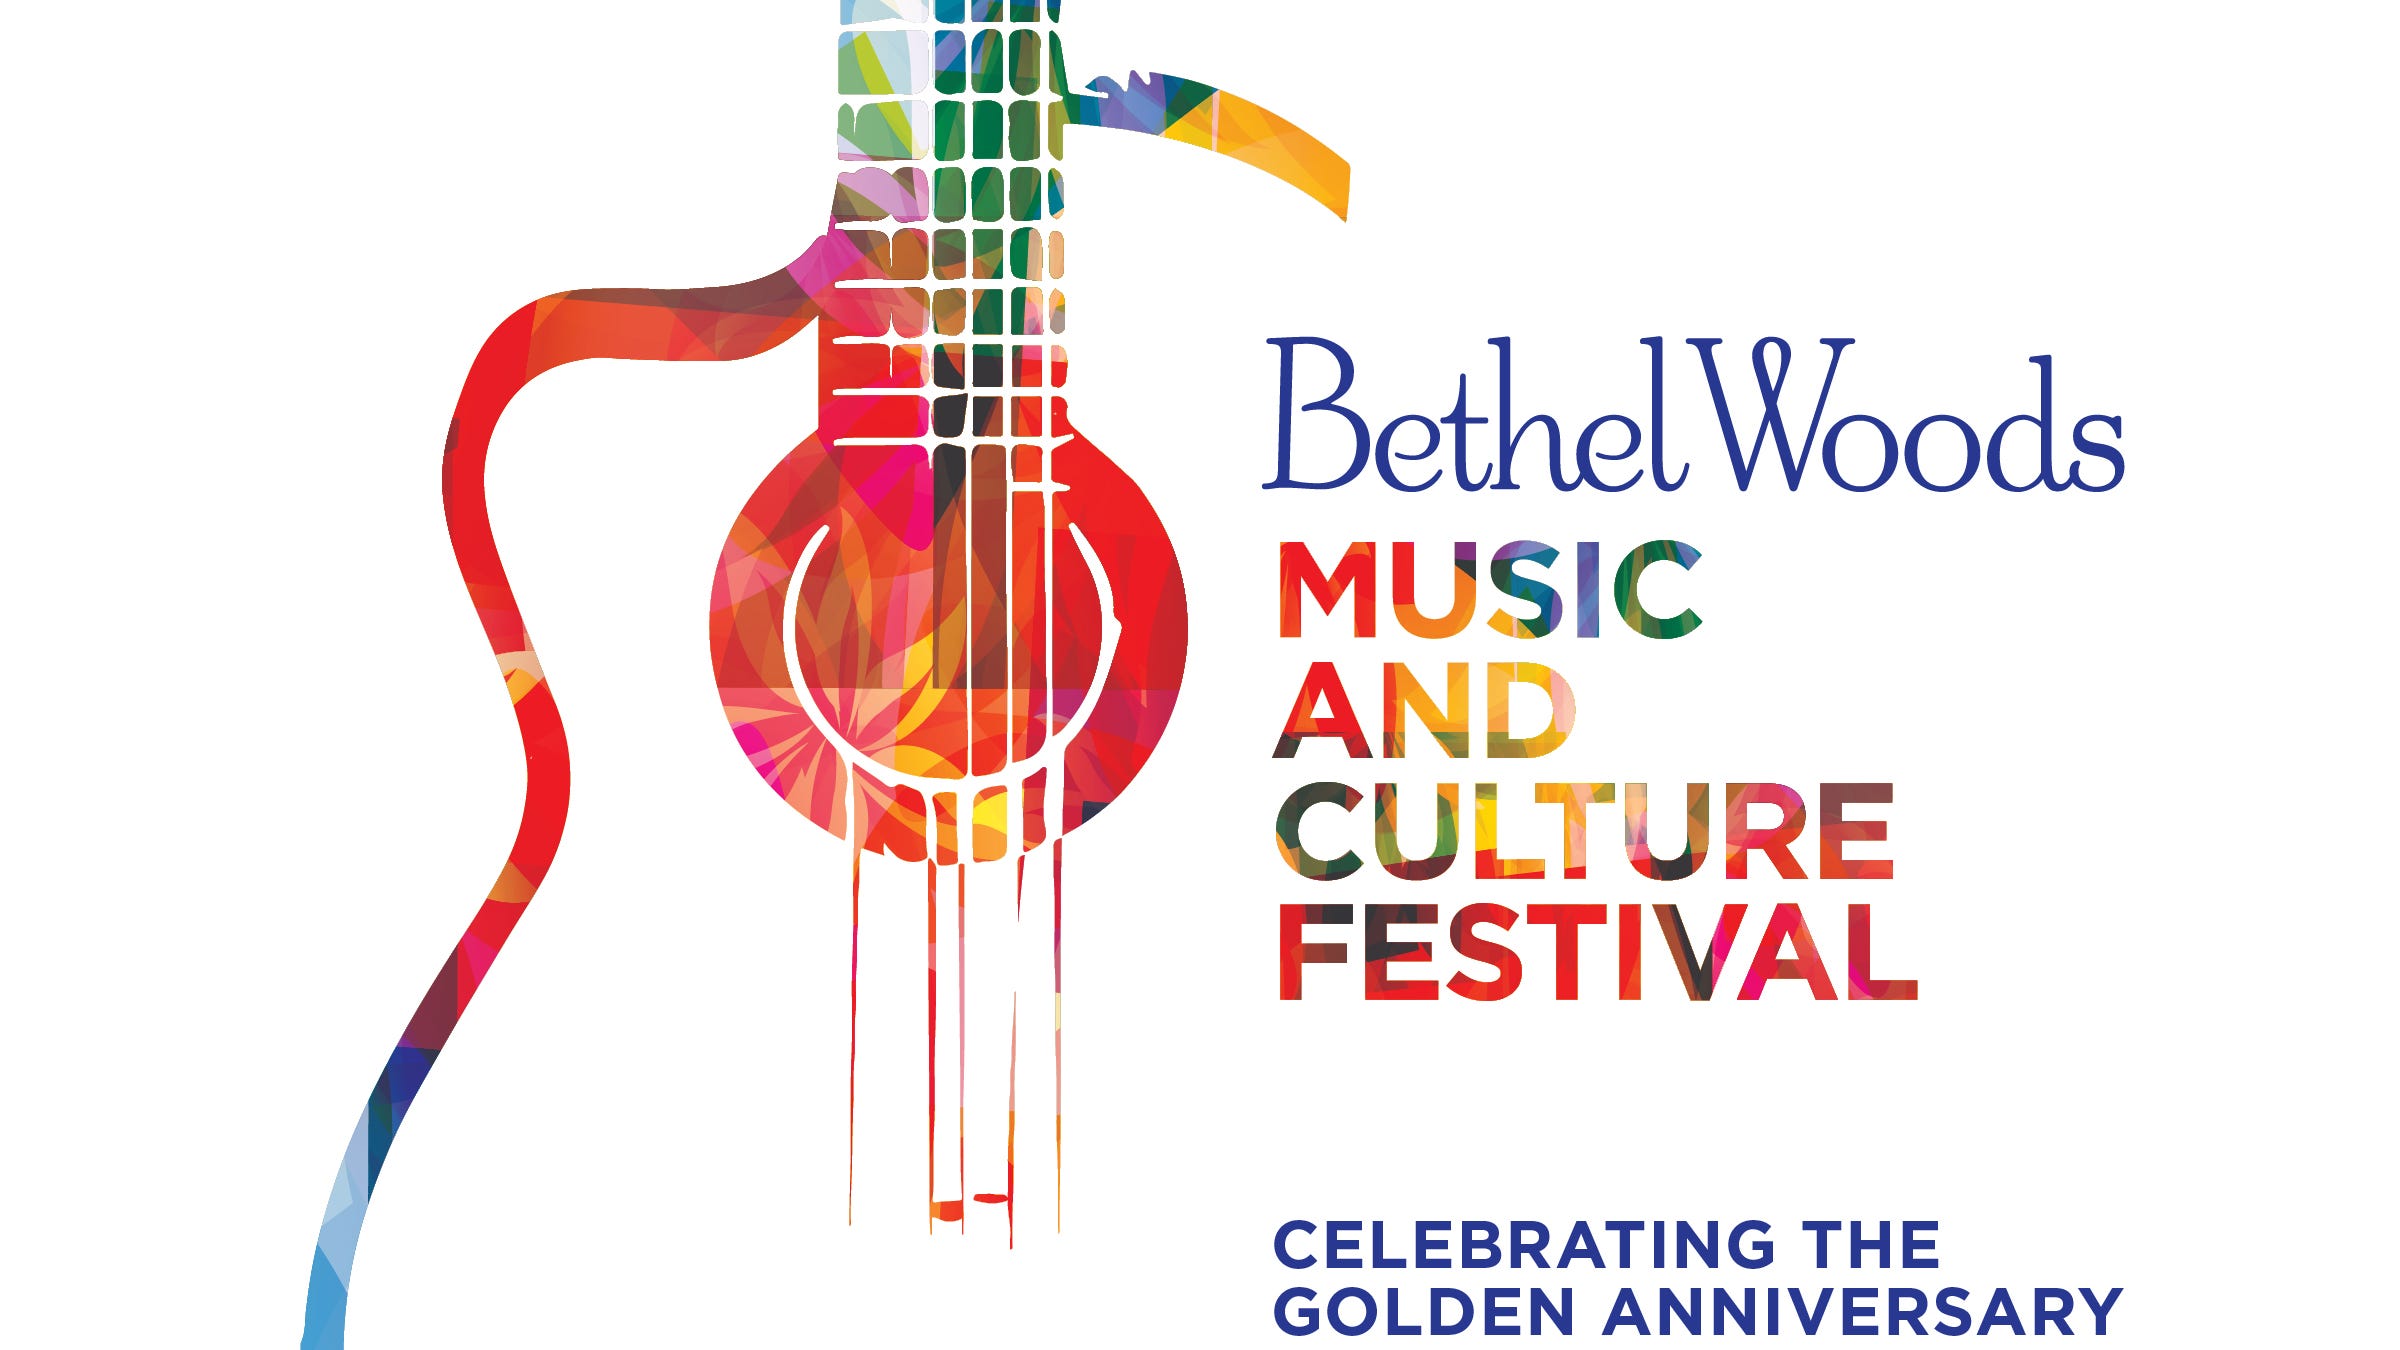 Woodstock Bethel Woods to host 50th anniversary festival